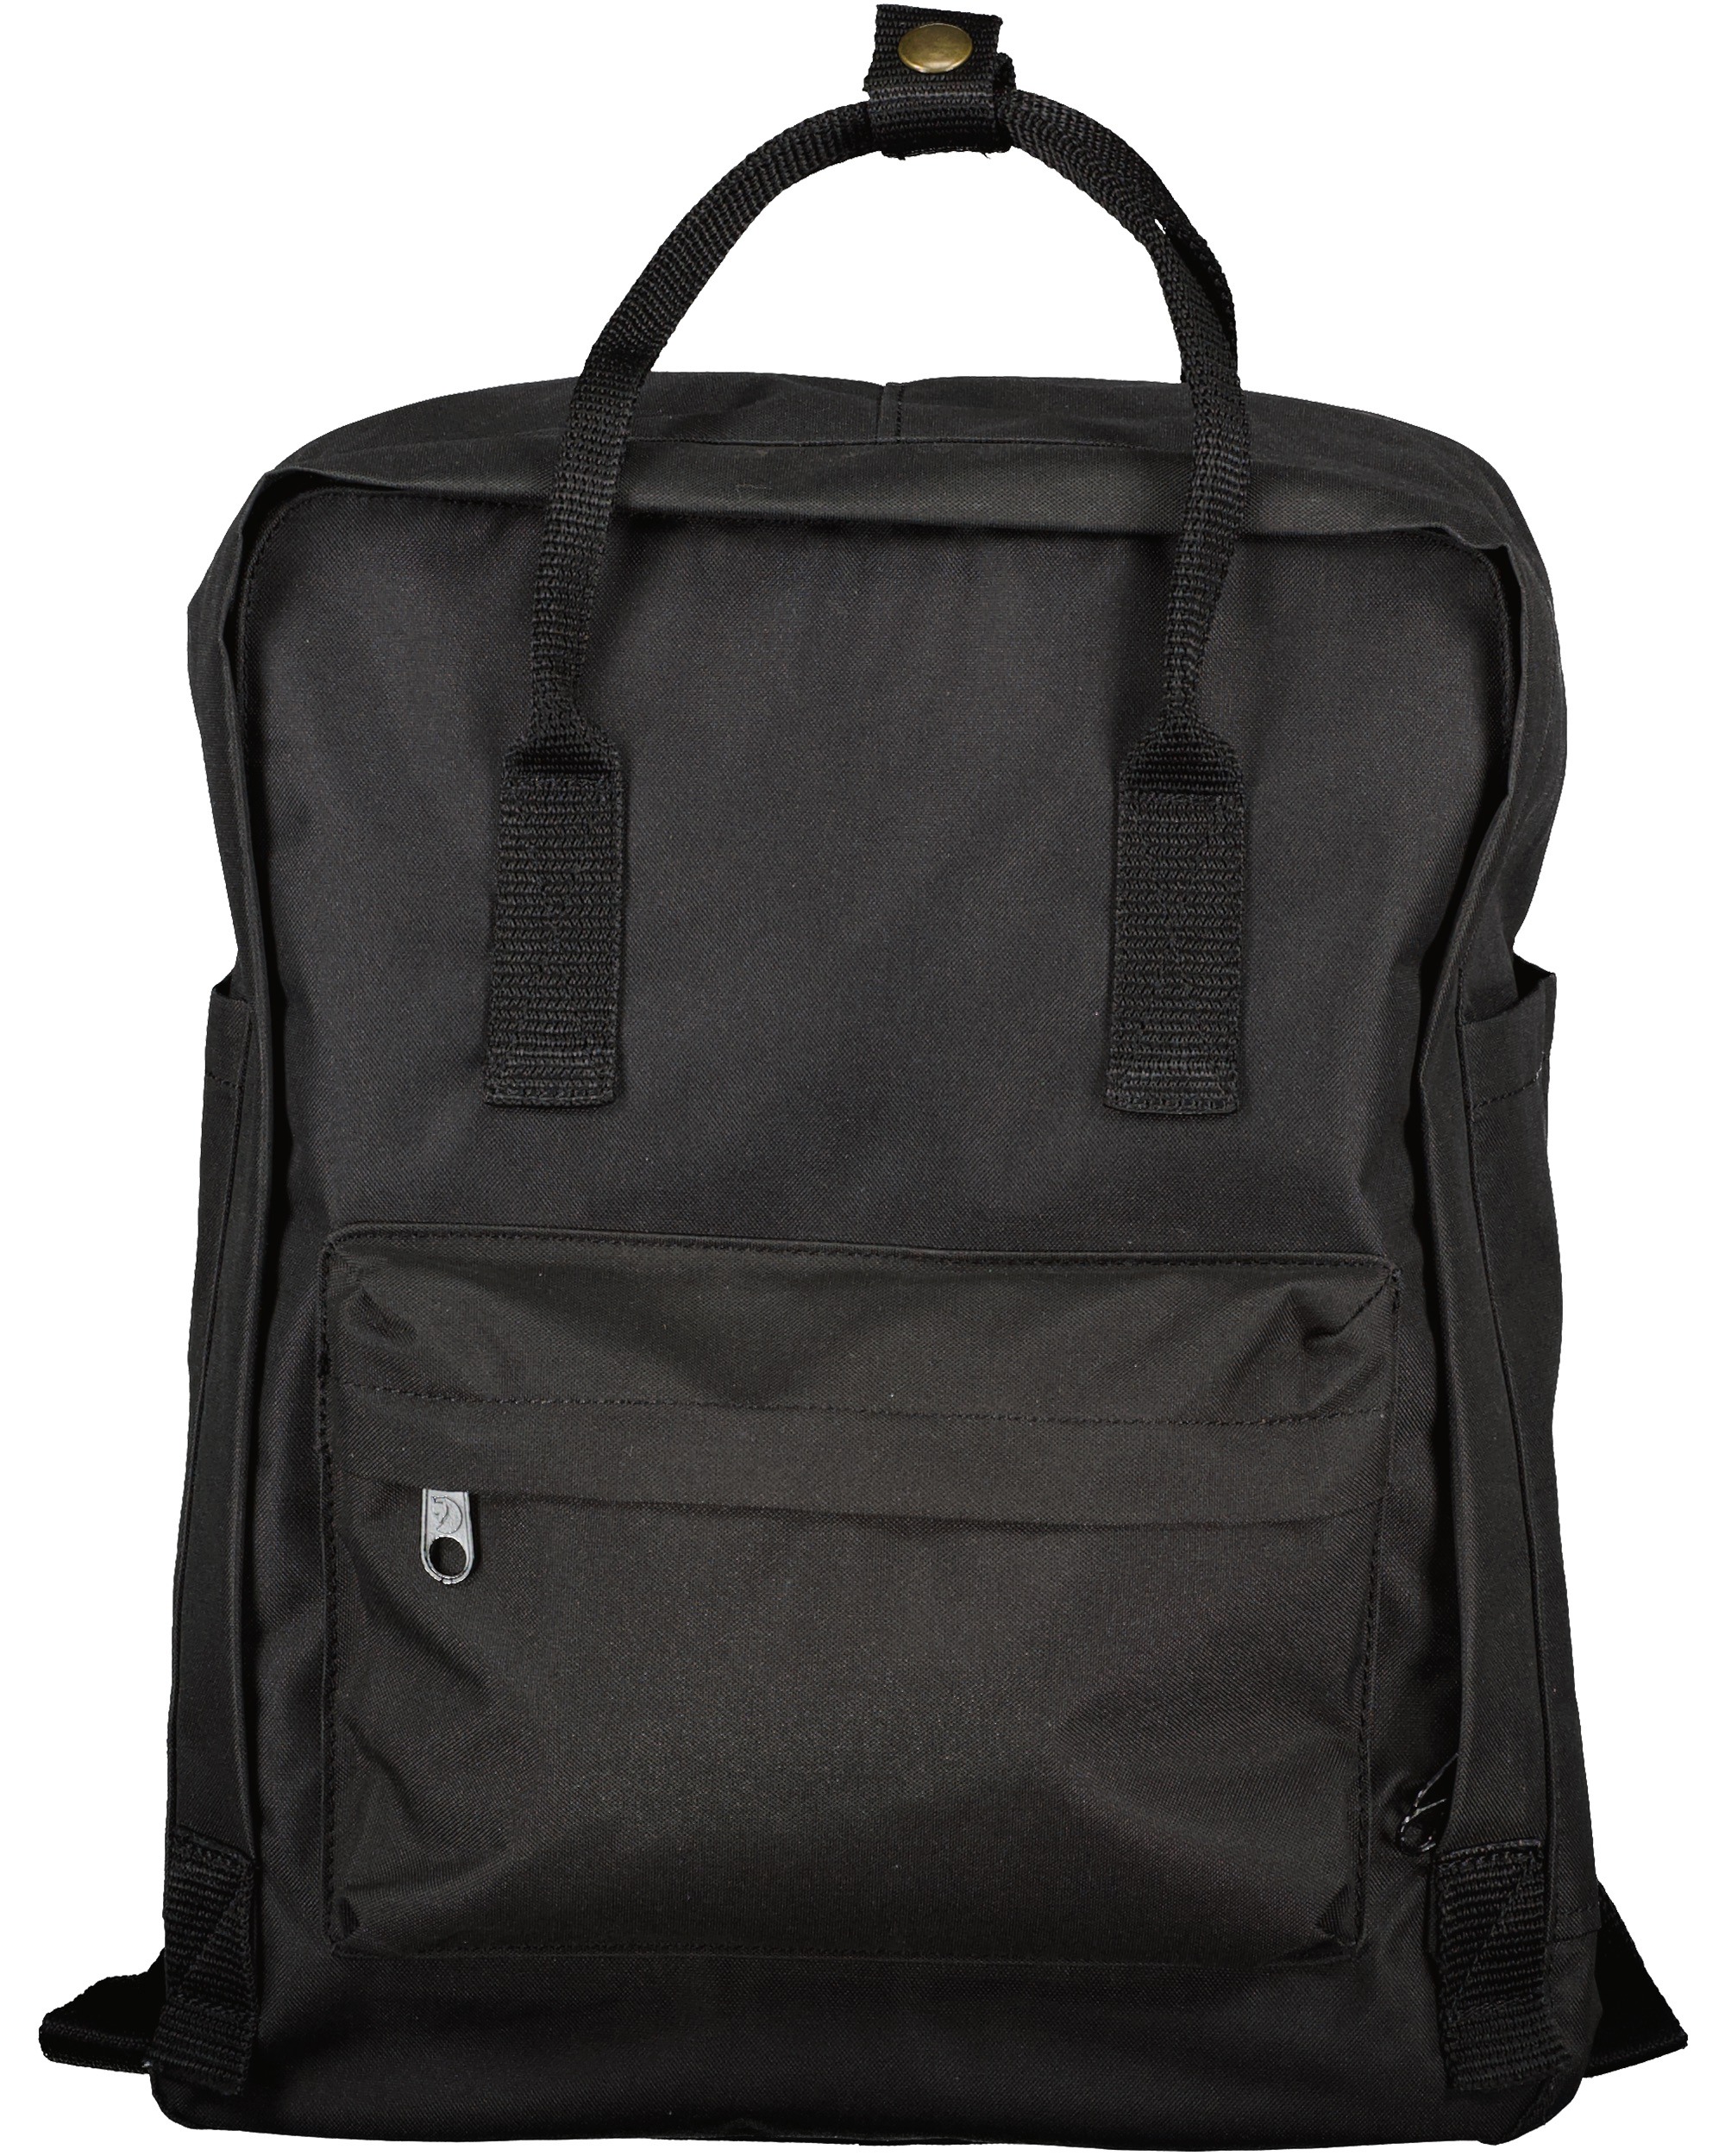 Enza 60279 - Modern Everyday Backpack